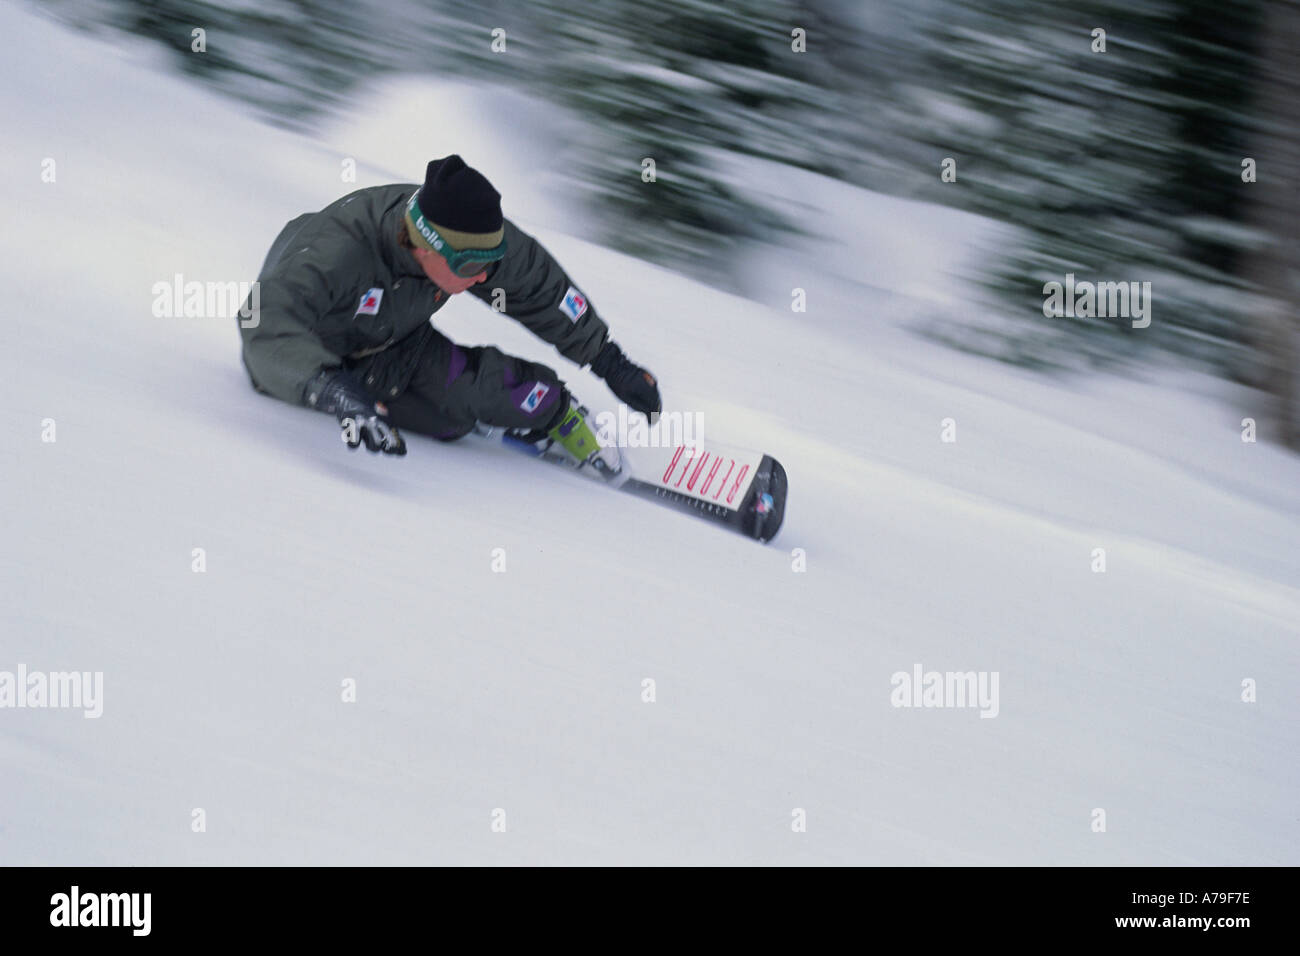 High speed Snowboarding Stock Photo - Alamy